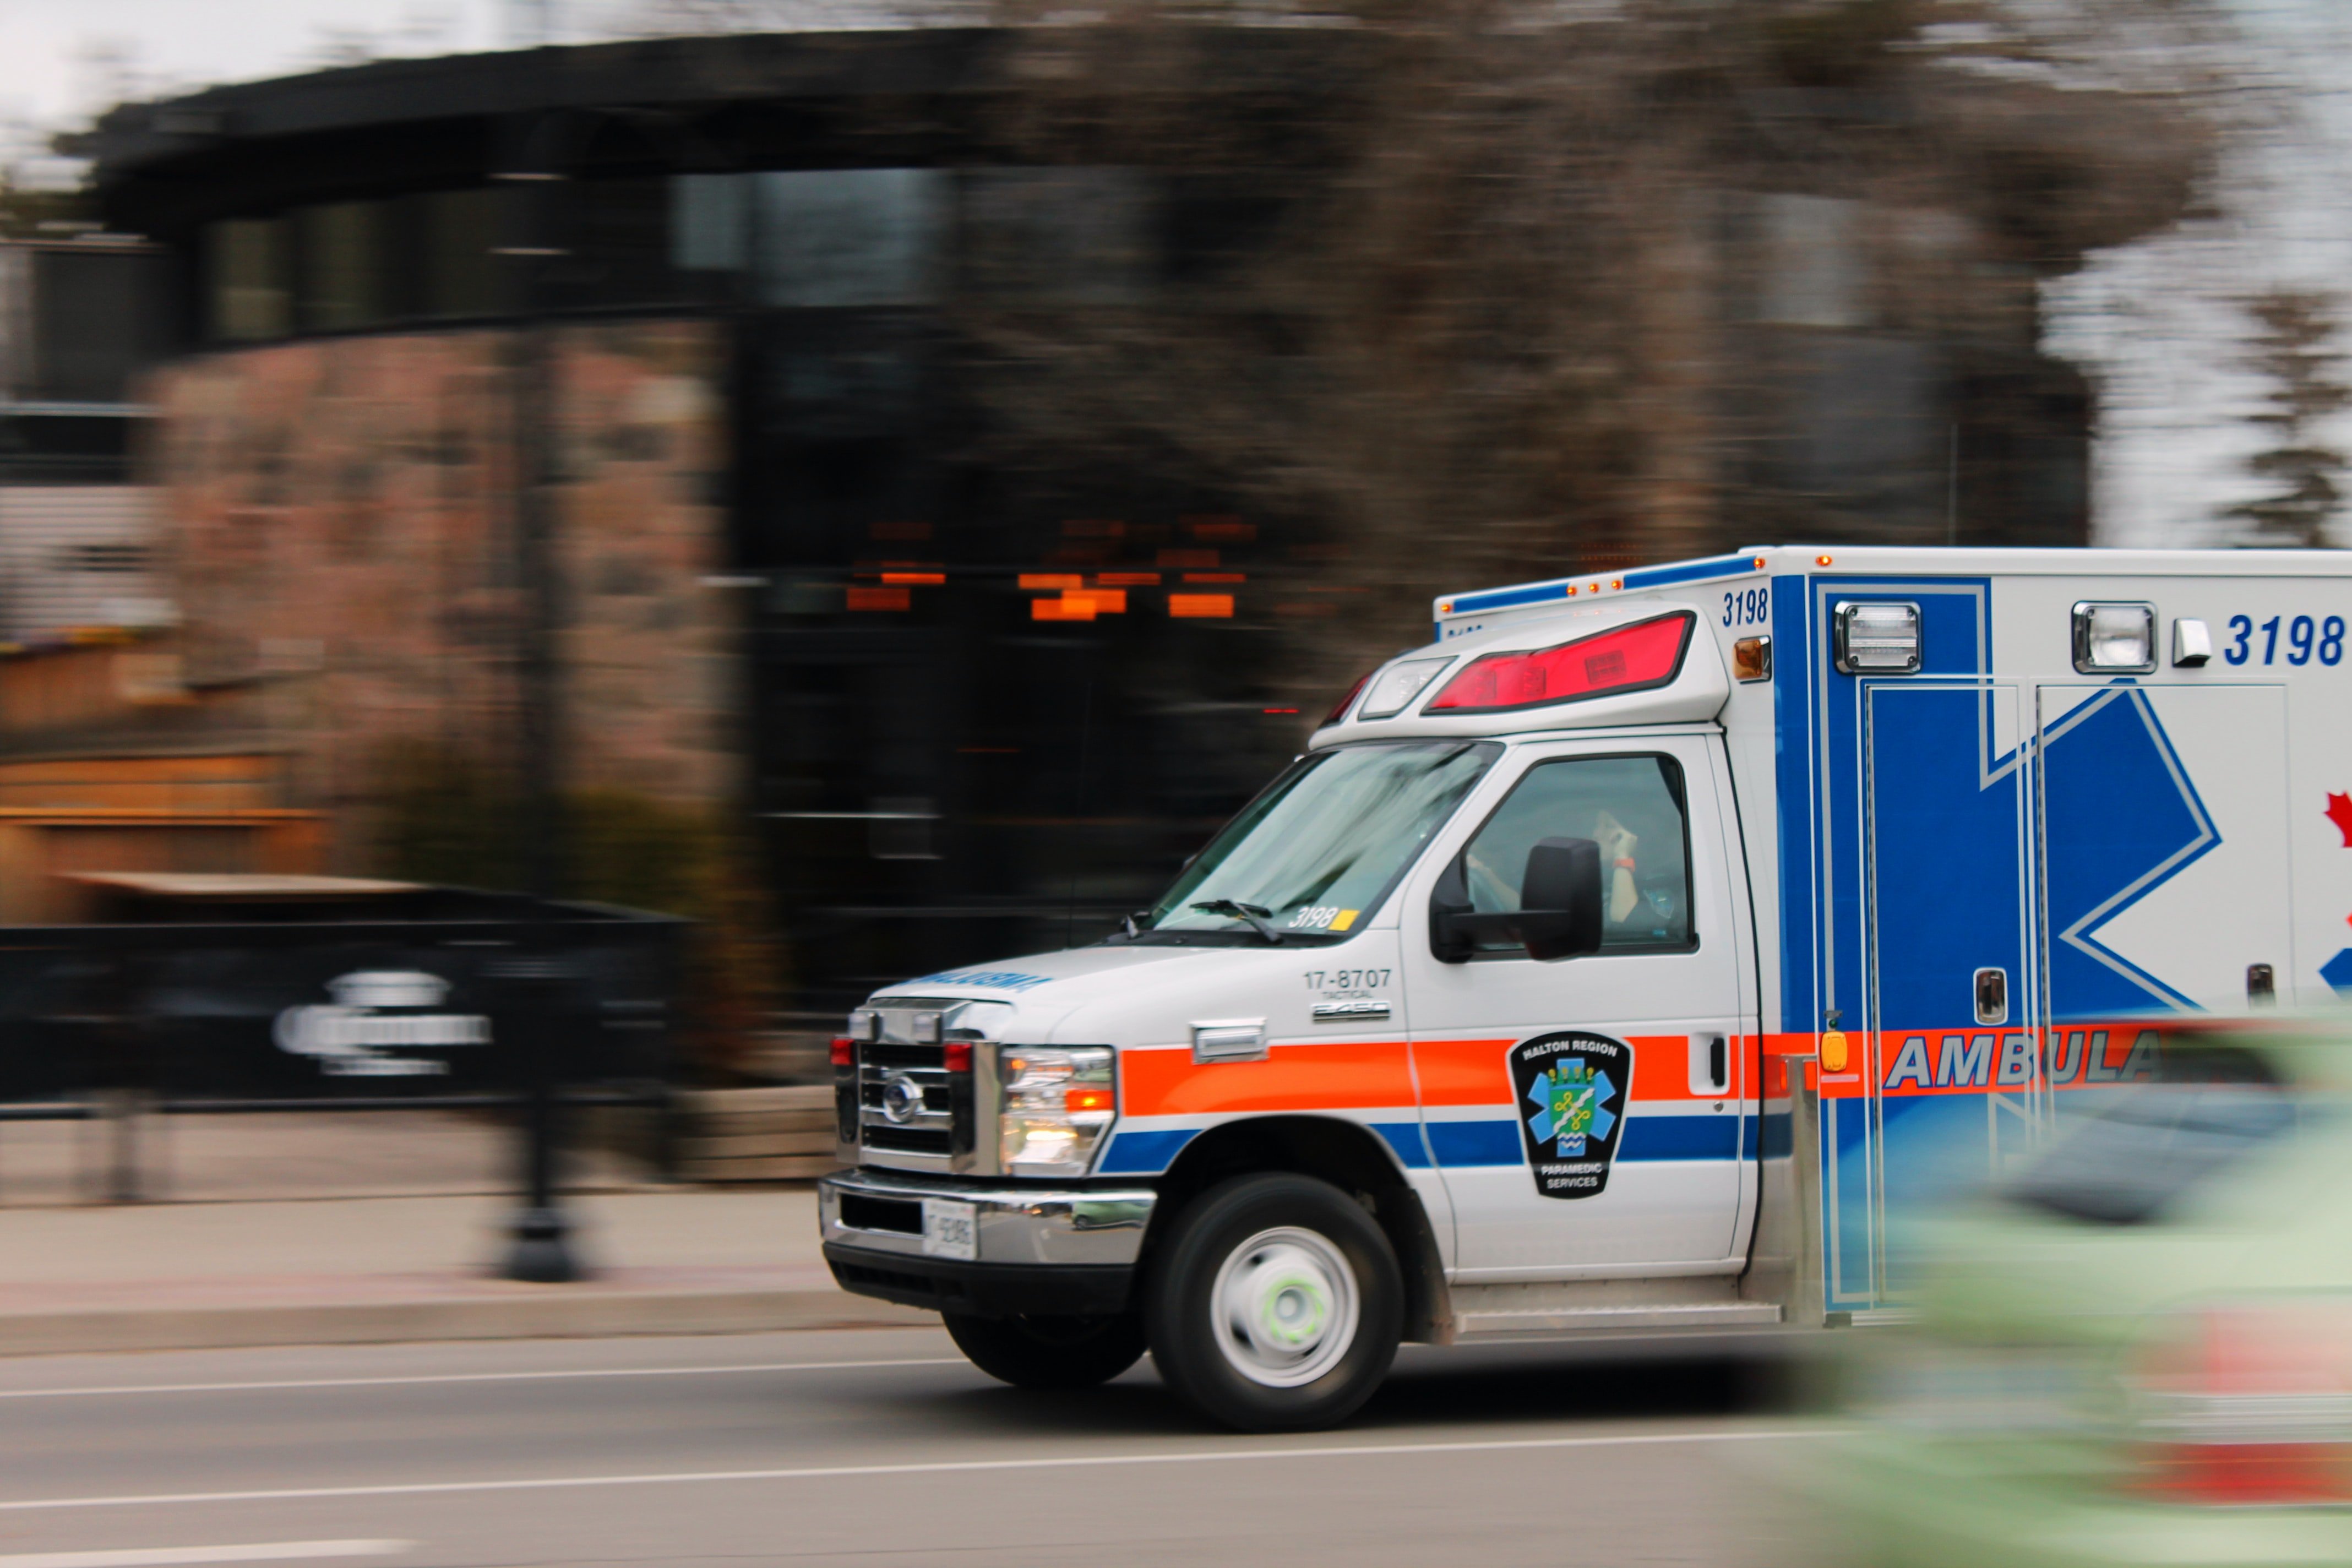 Once the ambulance arrived, Joanna drove off. | Source: Unsplash